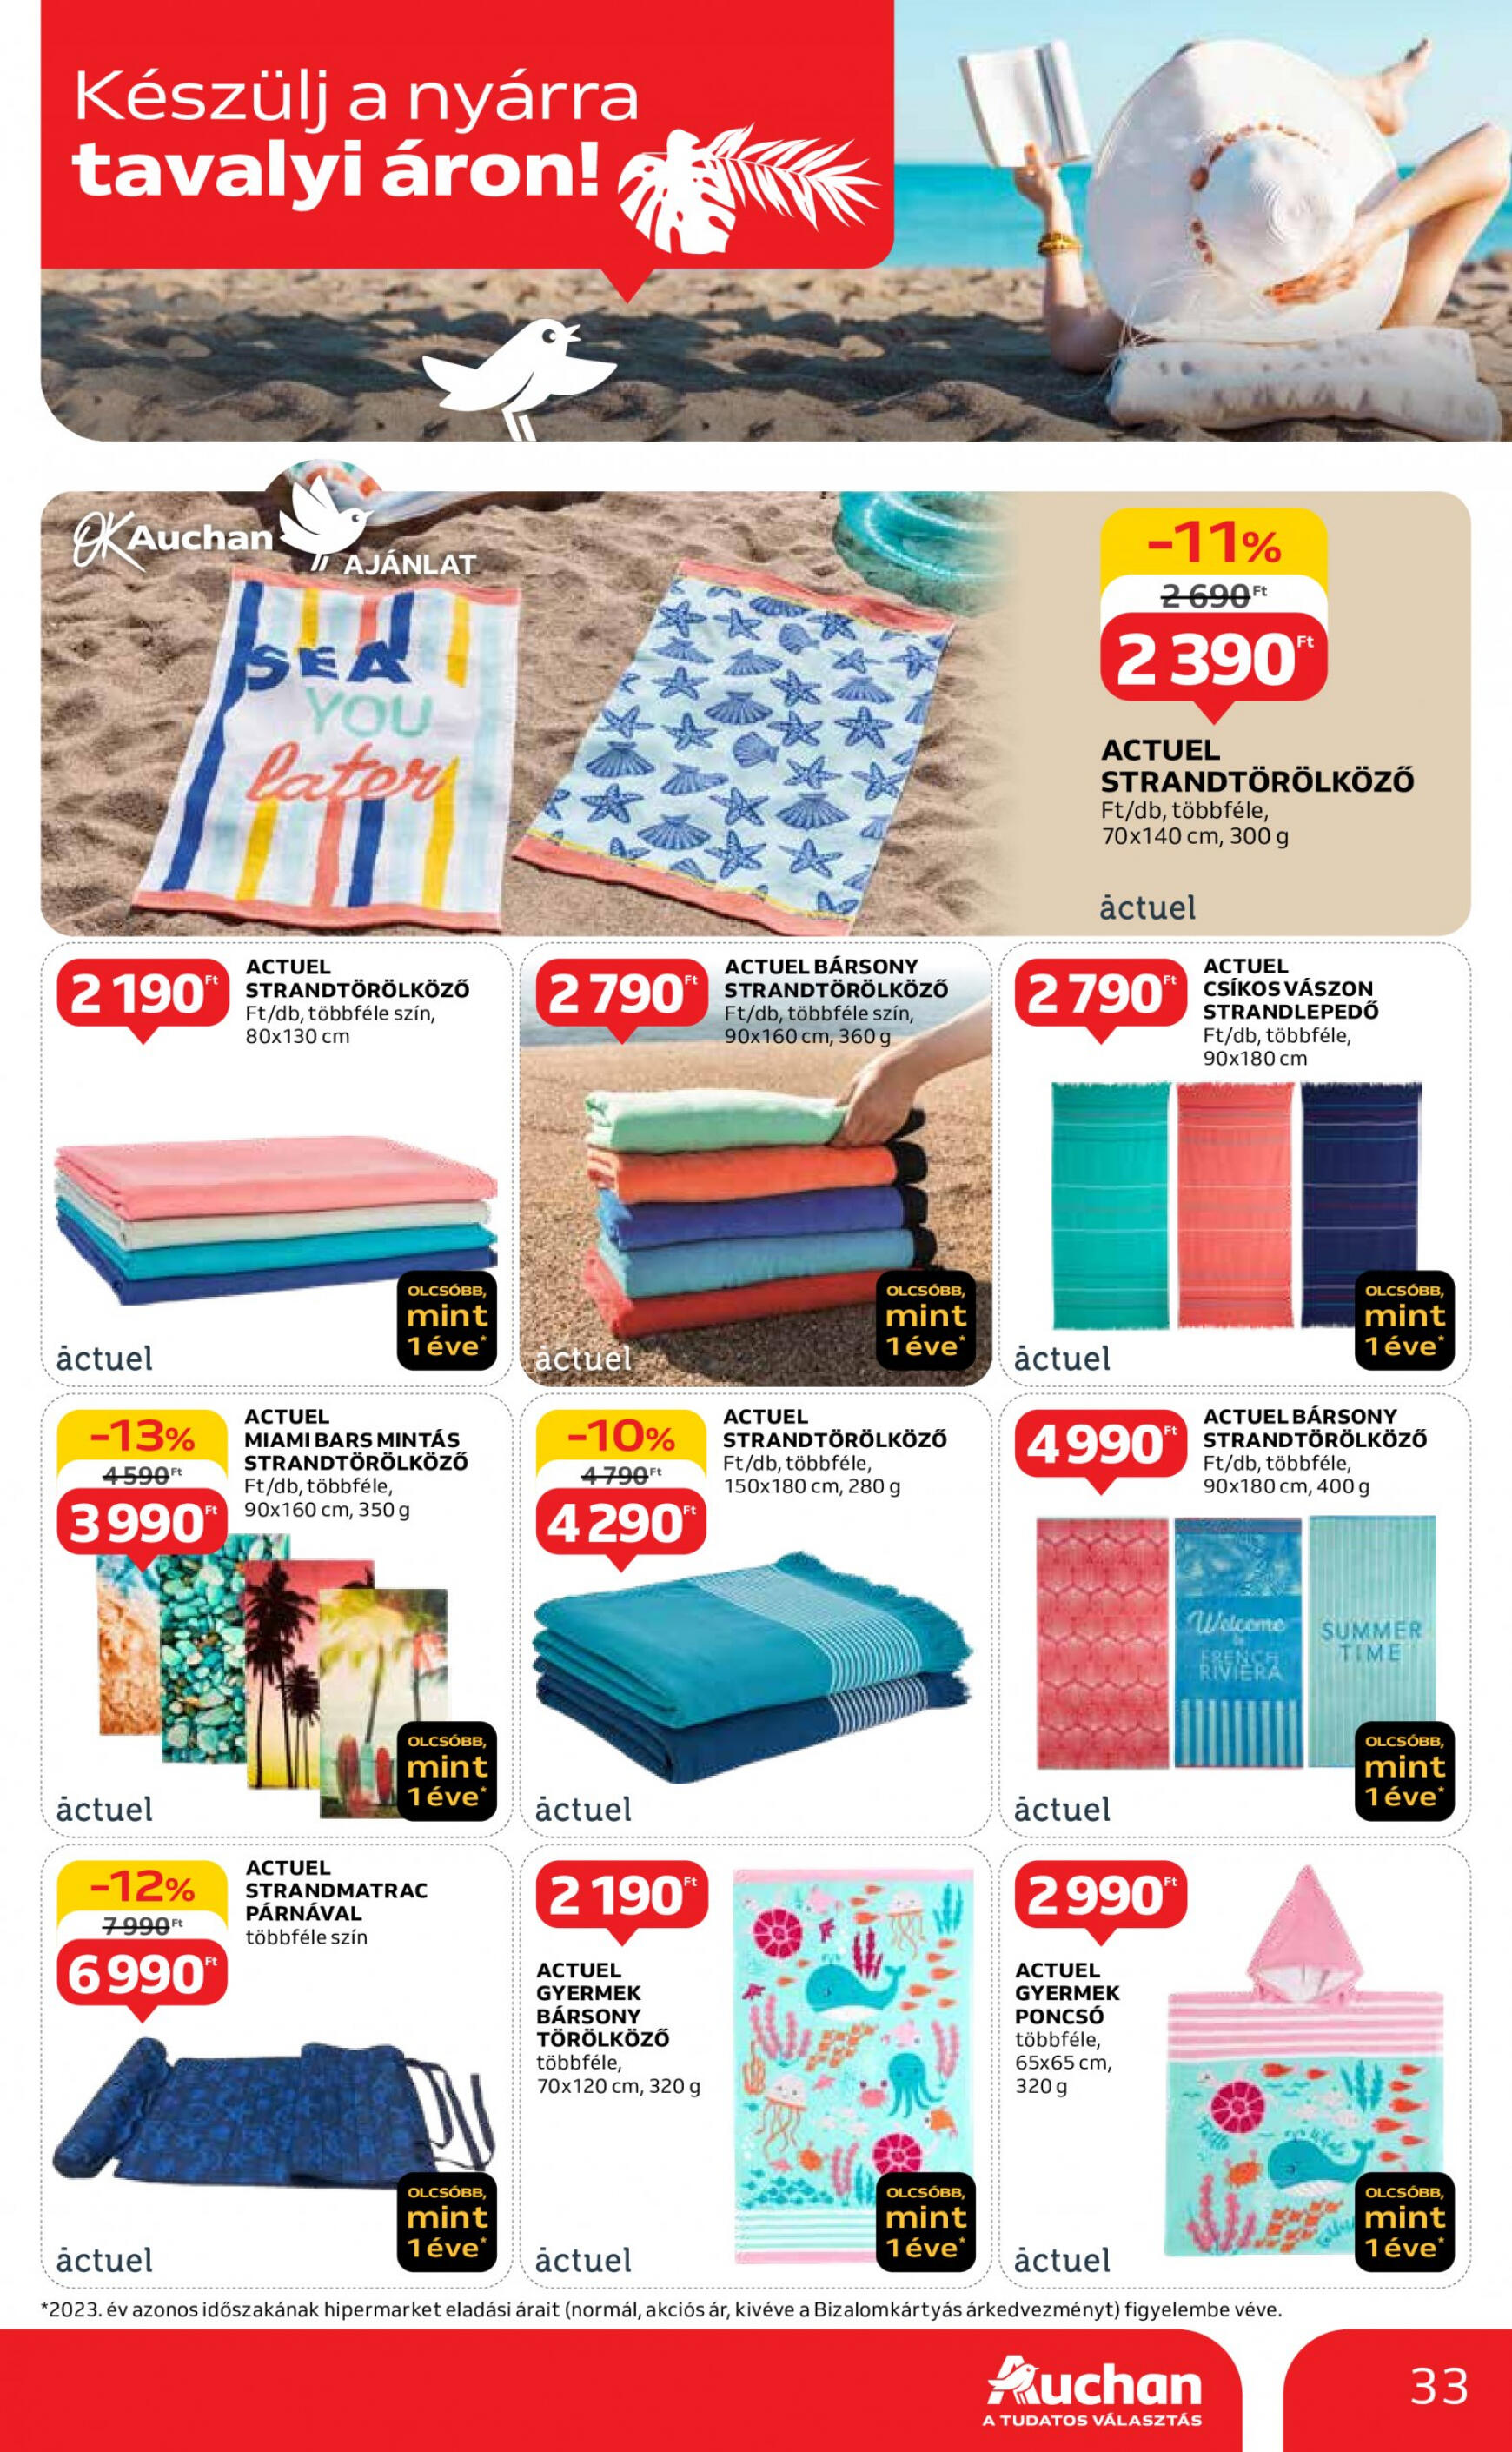 auchan - Aktuális újság Auchan 04.18. - 04.24. - page: 33